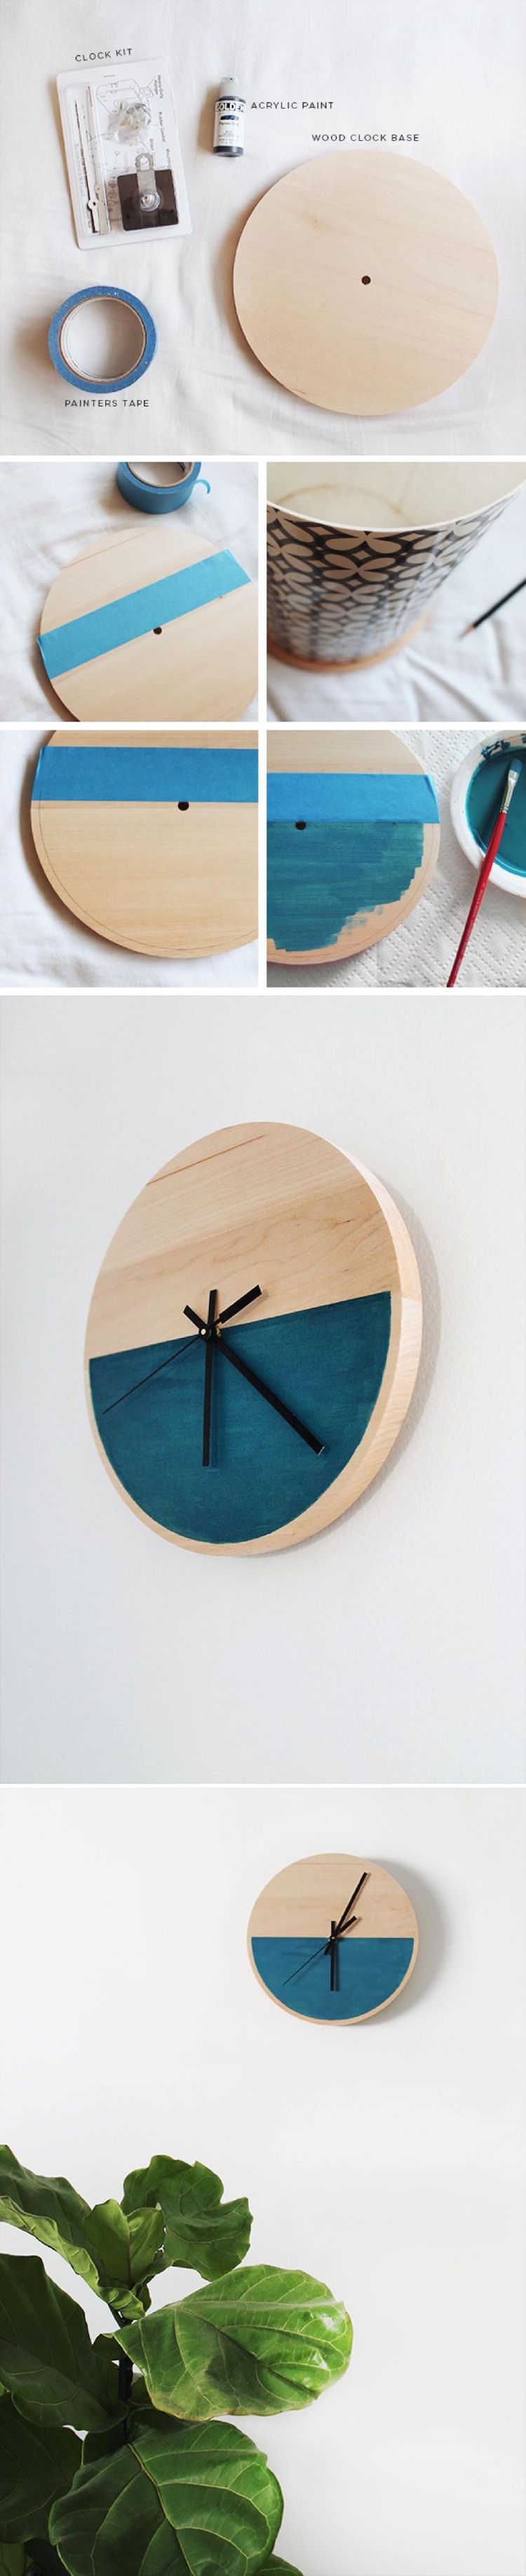 idees DIY horloge murale ronde bois étapes fabrication